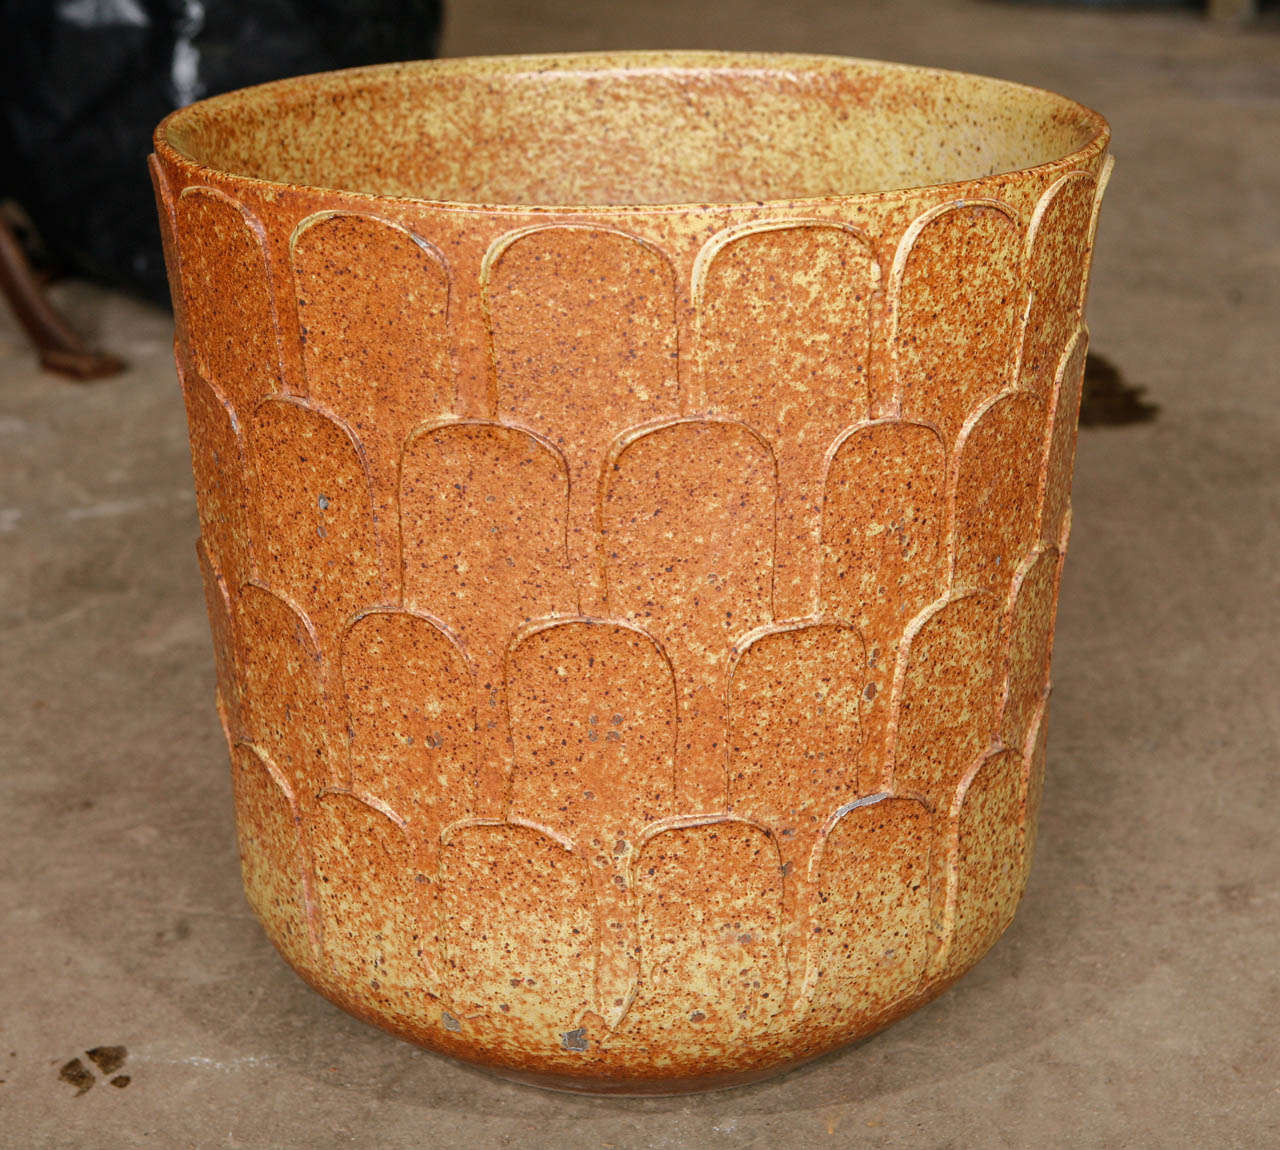 David Cressey Leaf Cressey Pattern or Thumbprint Stoneware Ceramic Planter, Architectural Pottery